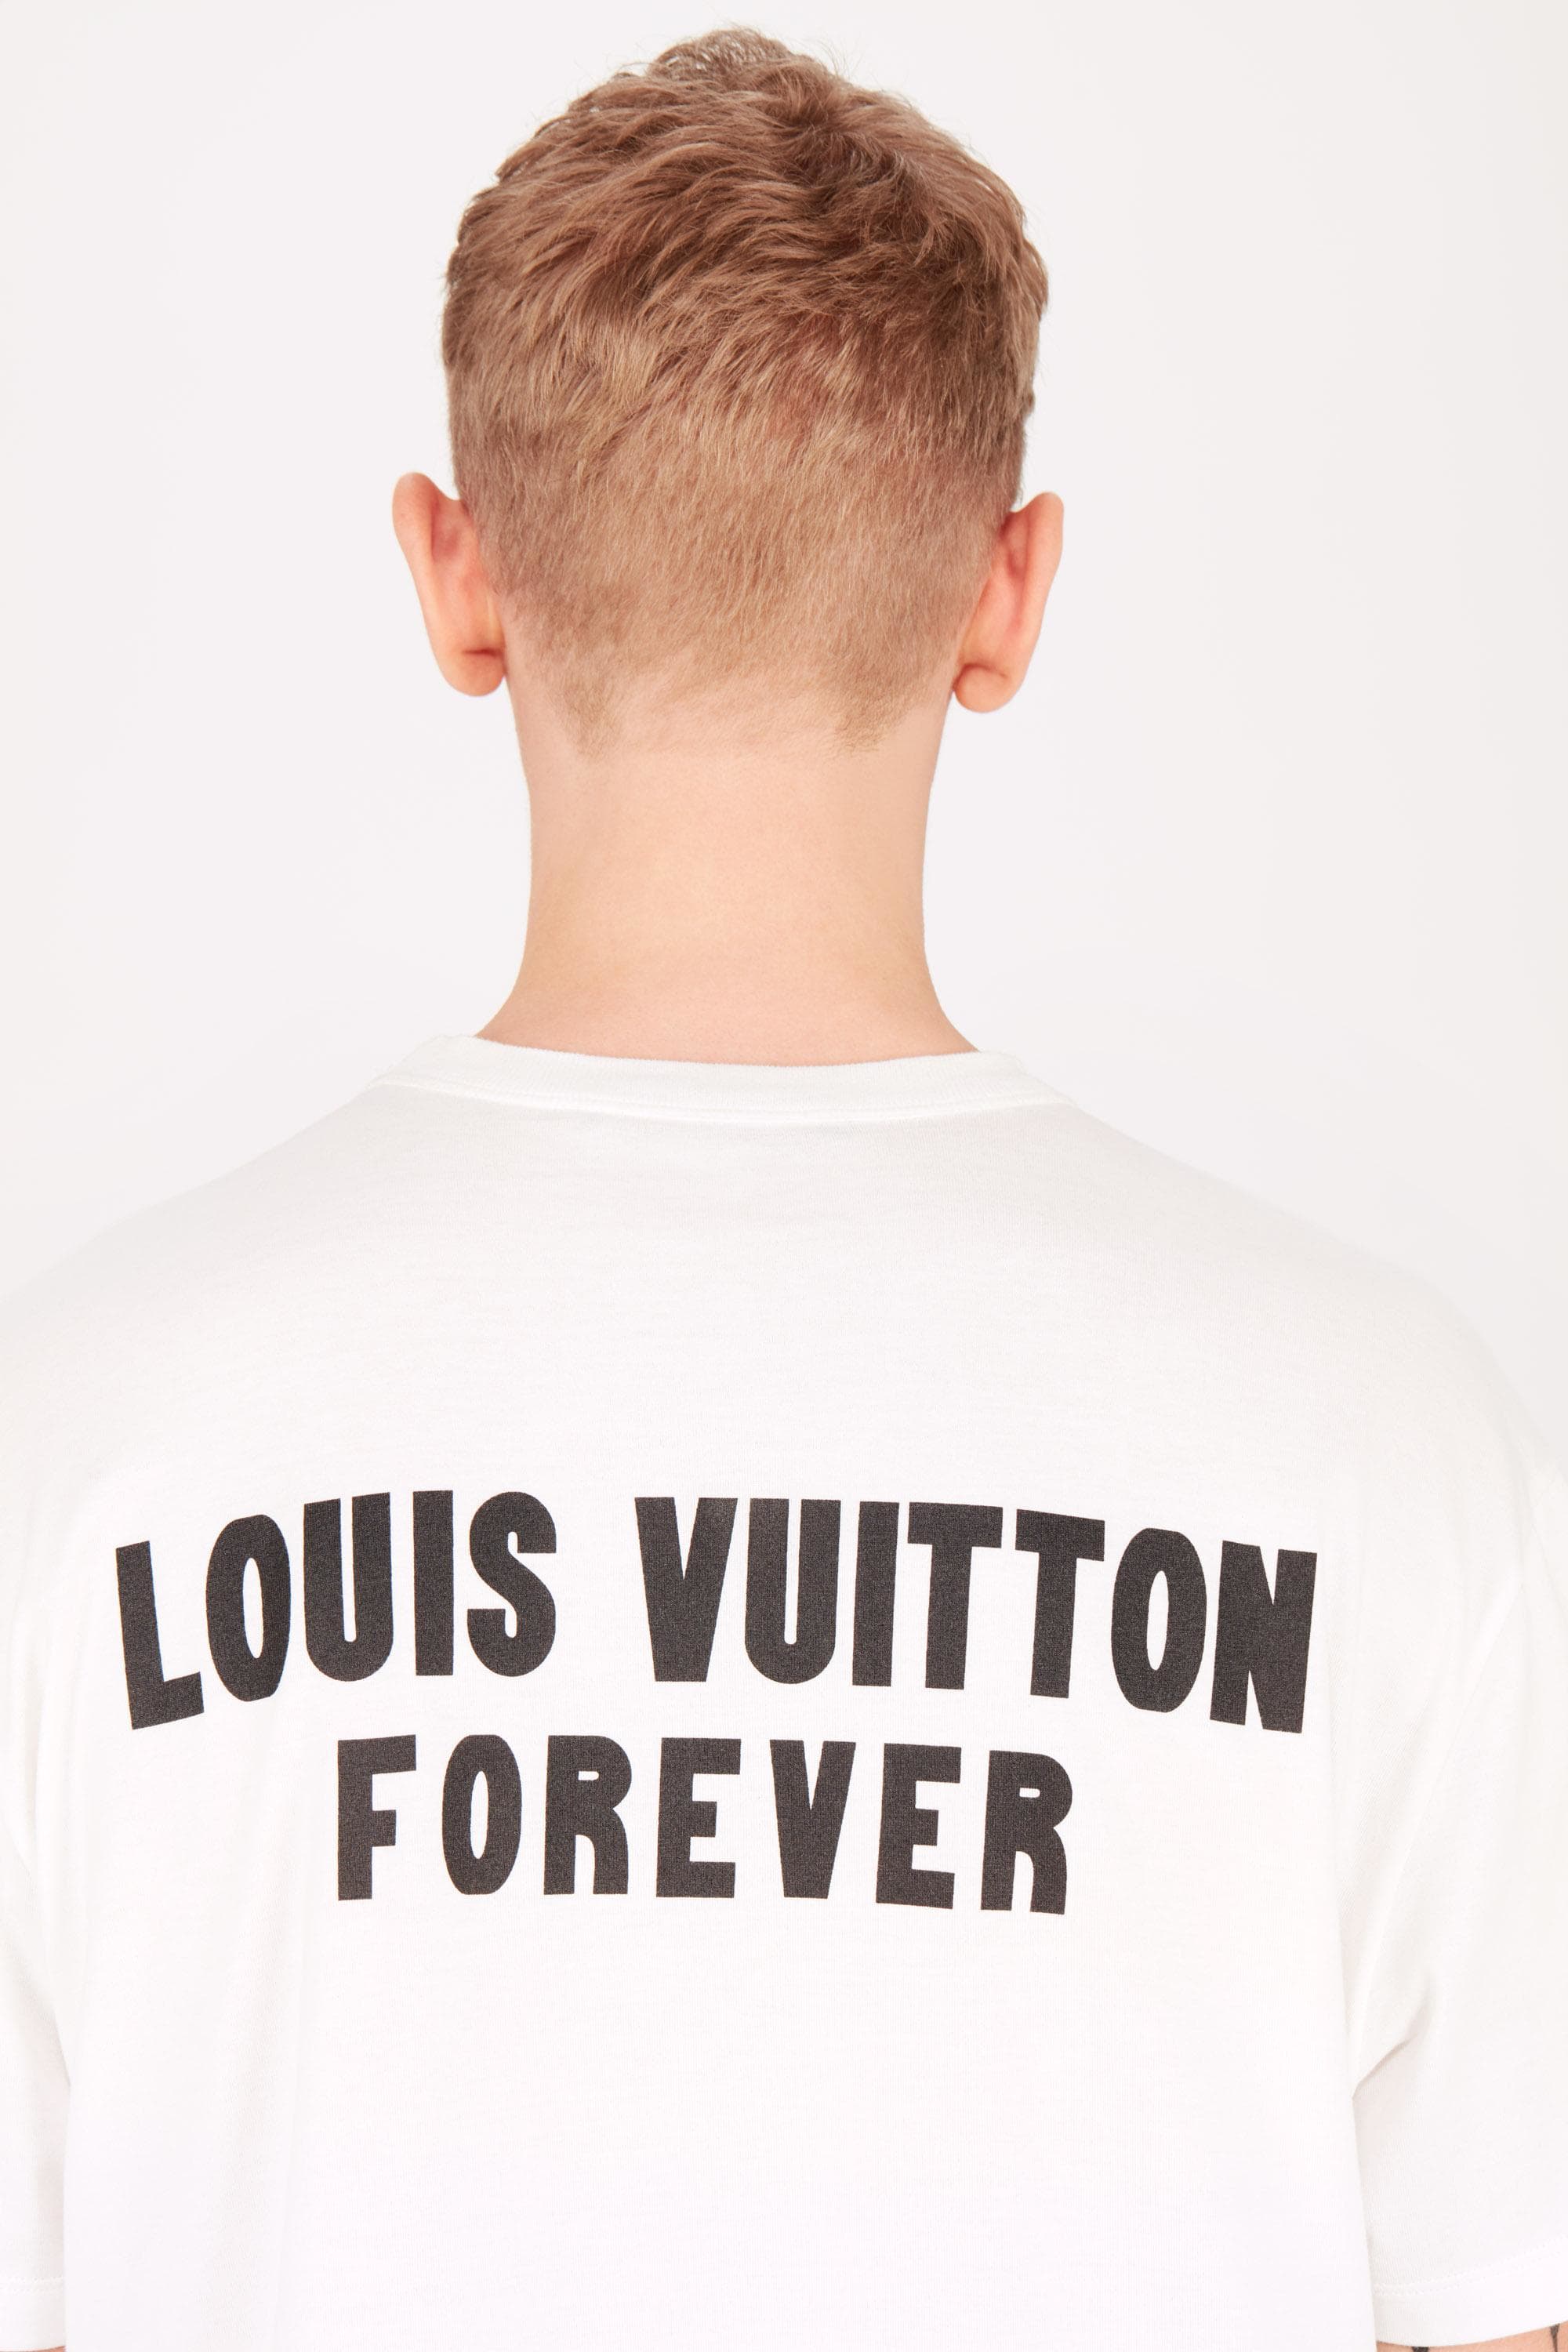 Louis Vuitton LV Logo - UPSIDE DOWN LV LOGO POCKET TEE TO WEAR. LOUIS VUITTON ®